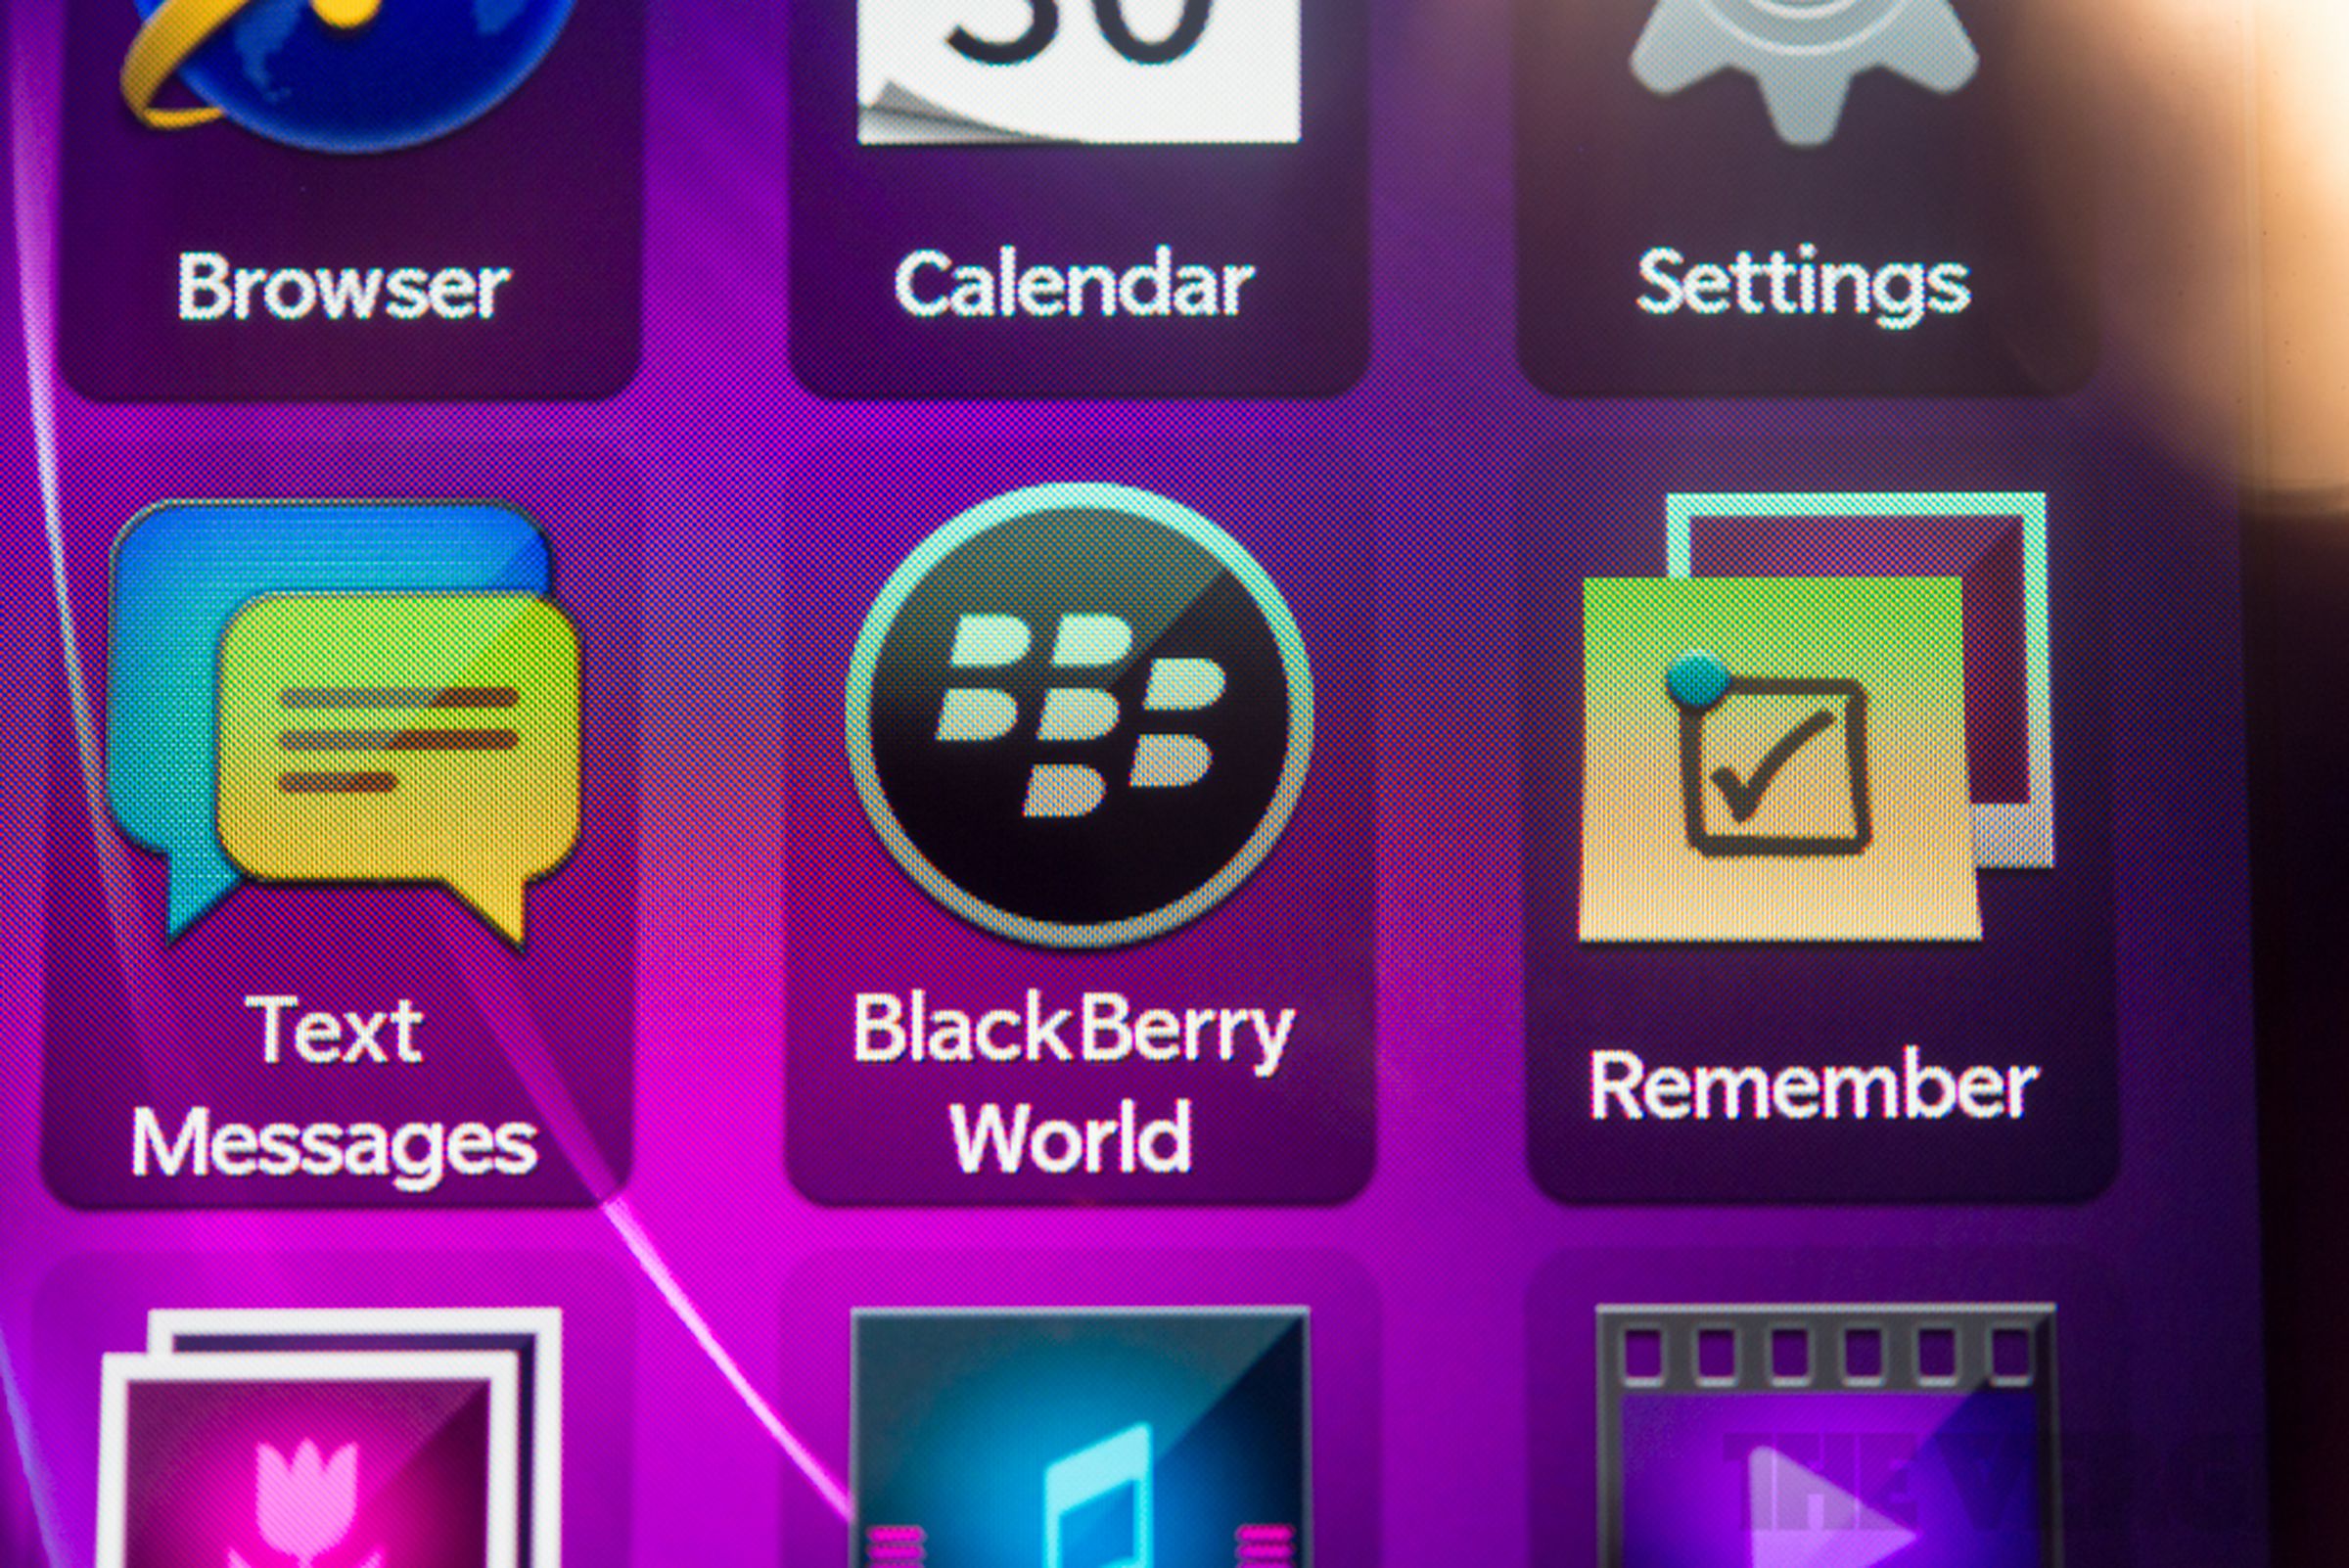 BlackBerry Q10 hands-on photos